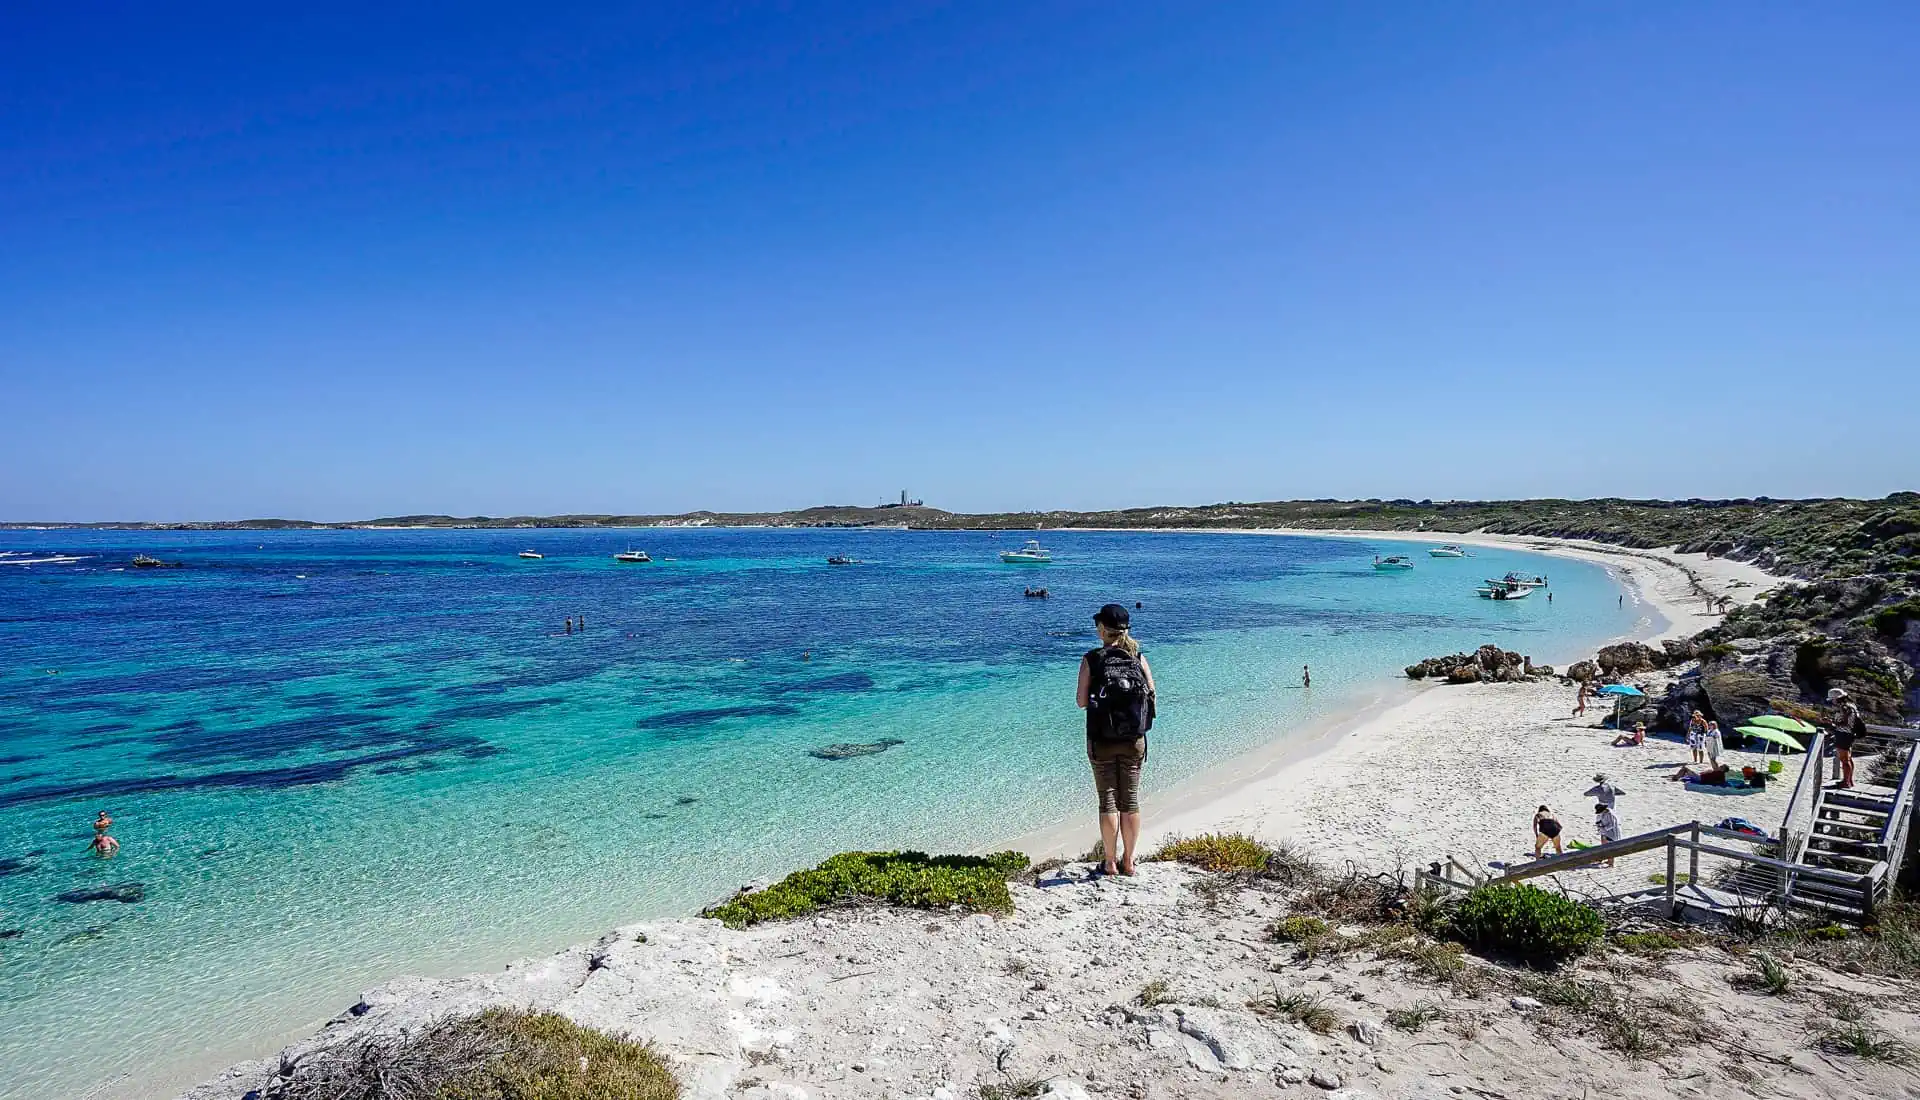 Dan looks over Salmon Bay on Rottnest Island, one of the best beaches in Western Australia.